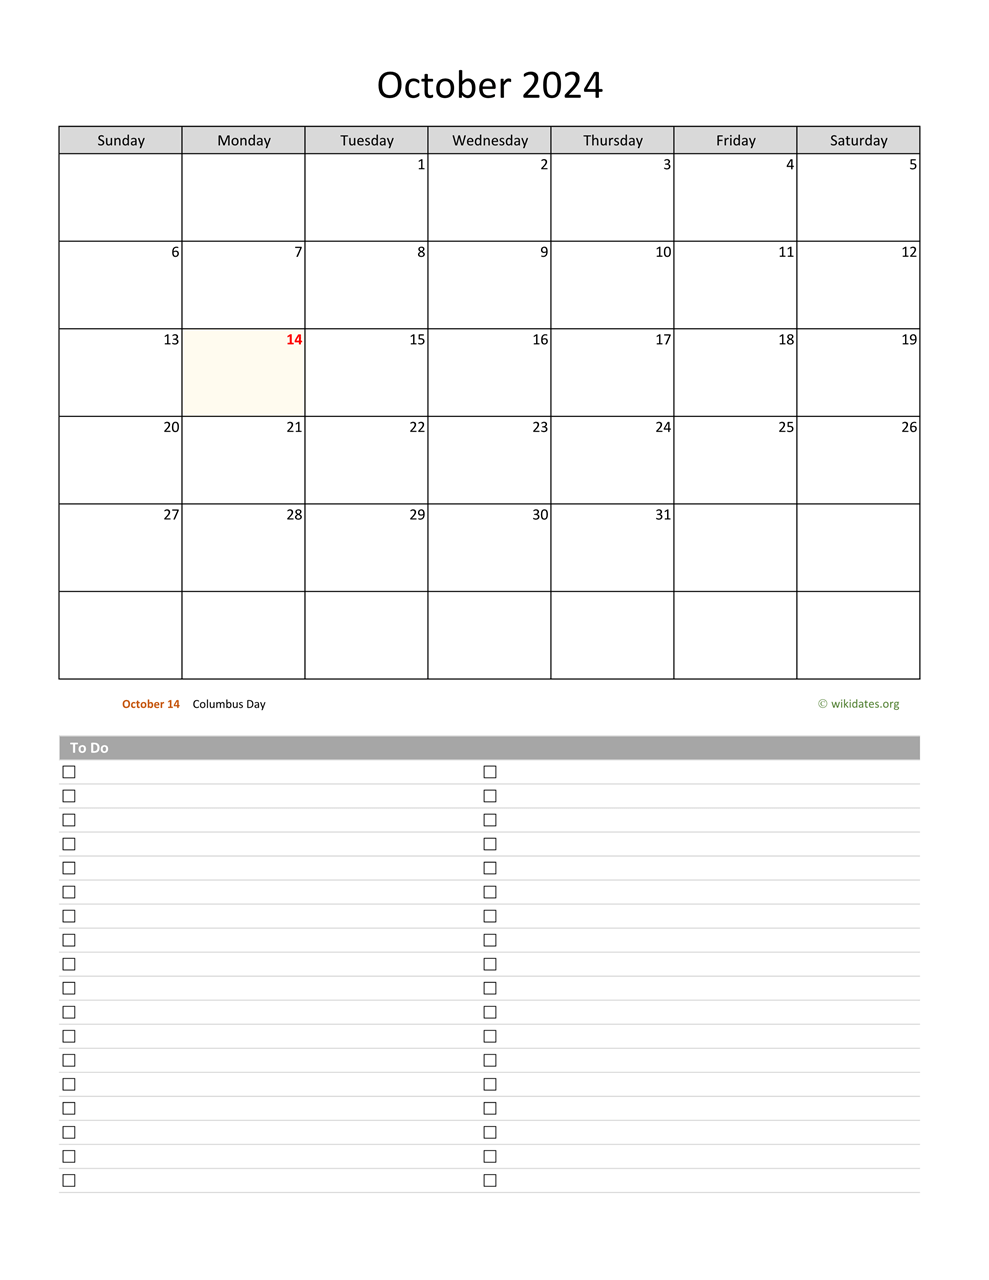 October 2024 Calendar with ToDo List